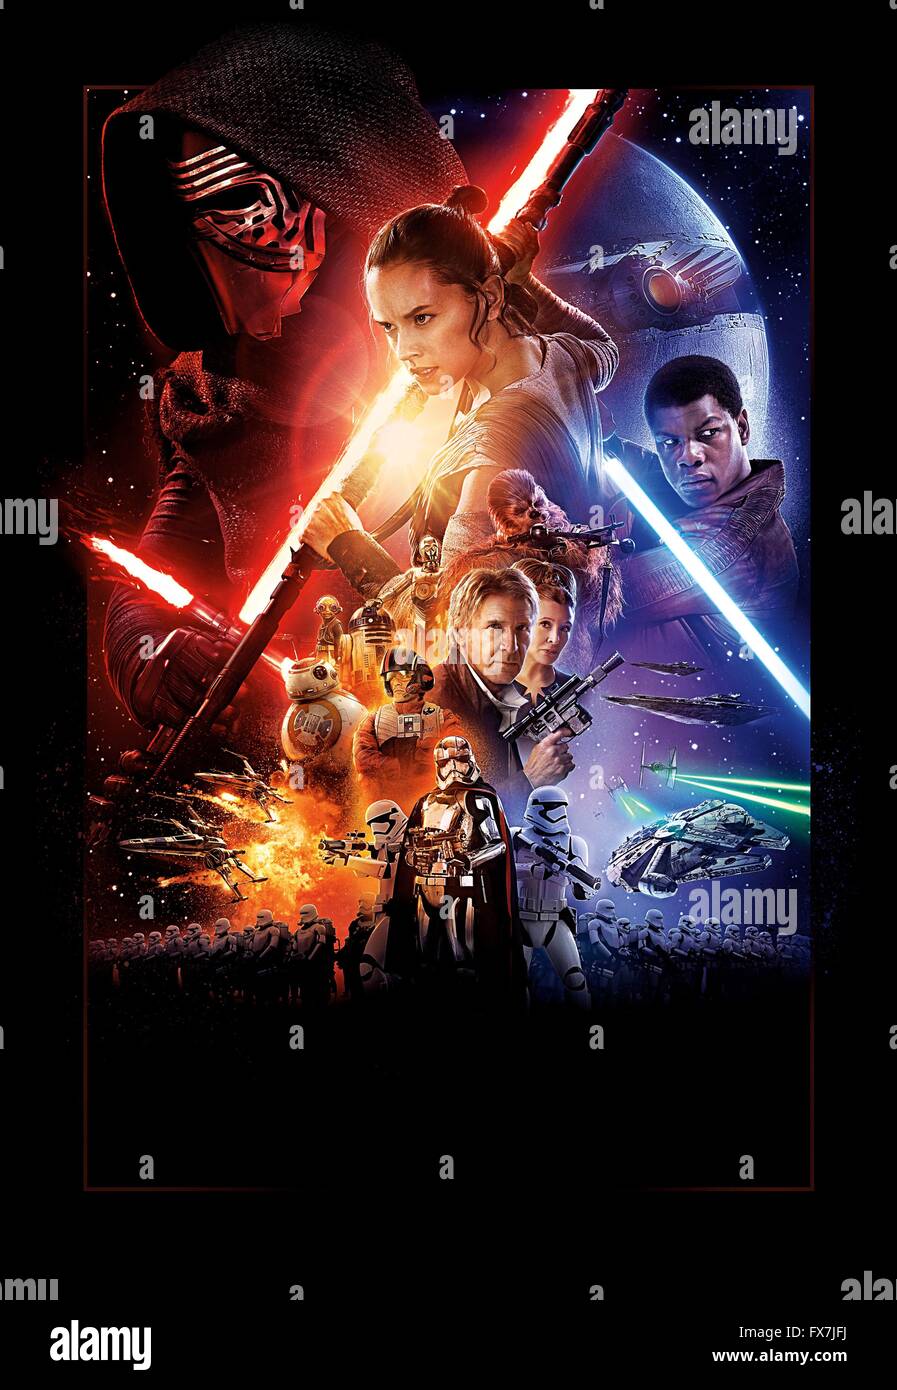 Star Wars: Episode VII - The Force Awakens Year : 2015 USA Director : J.J. Abrams Movie poster (Art Work) Stock Photo